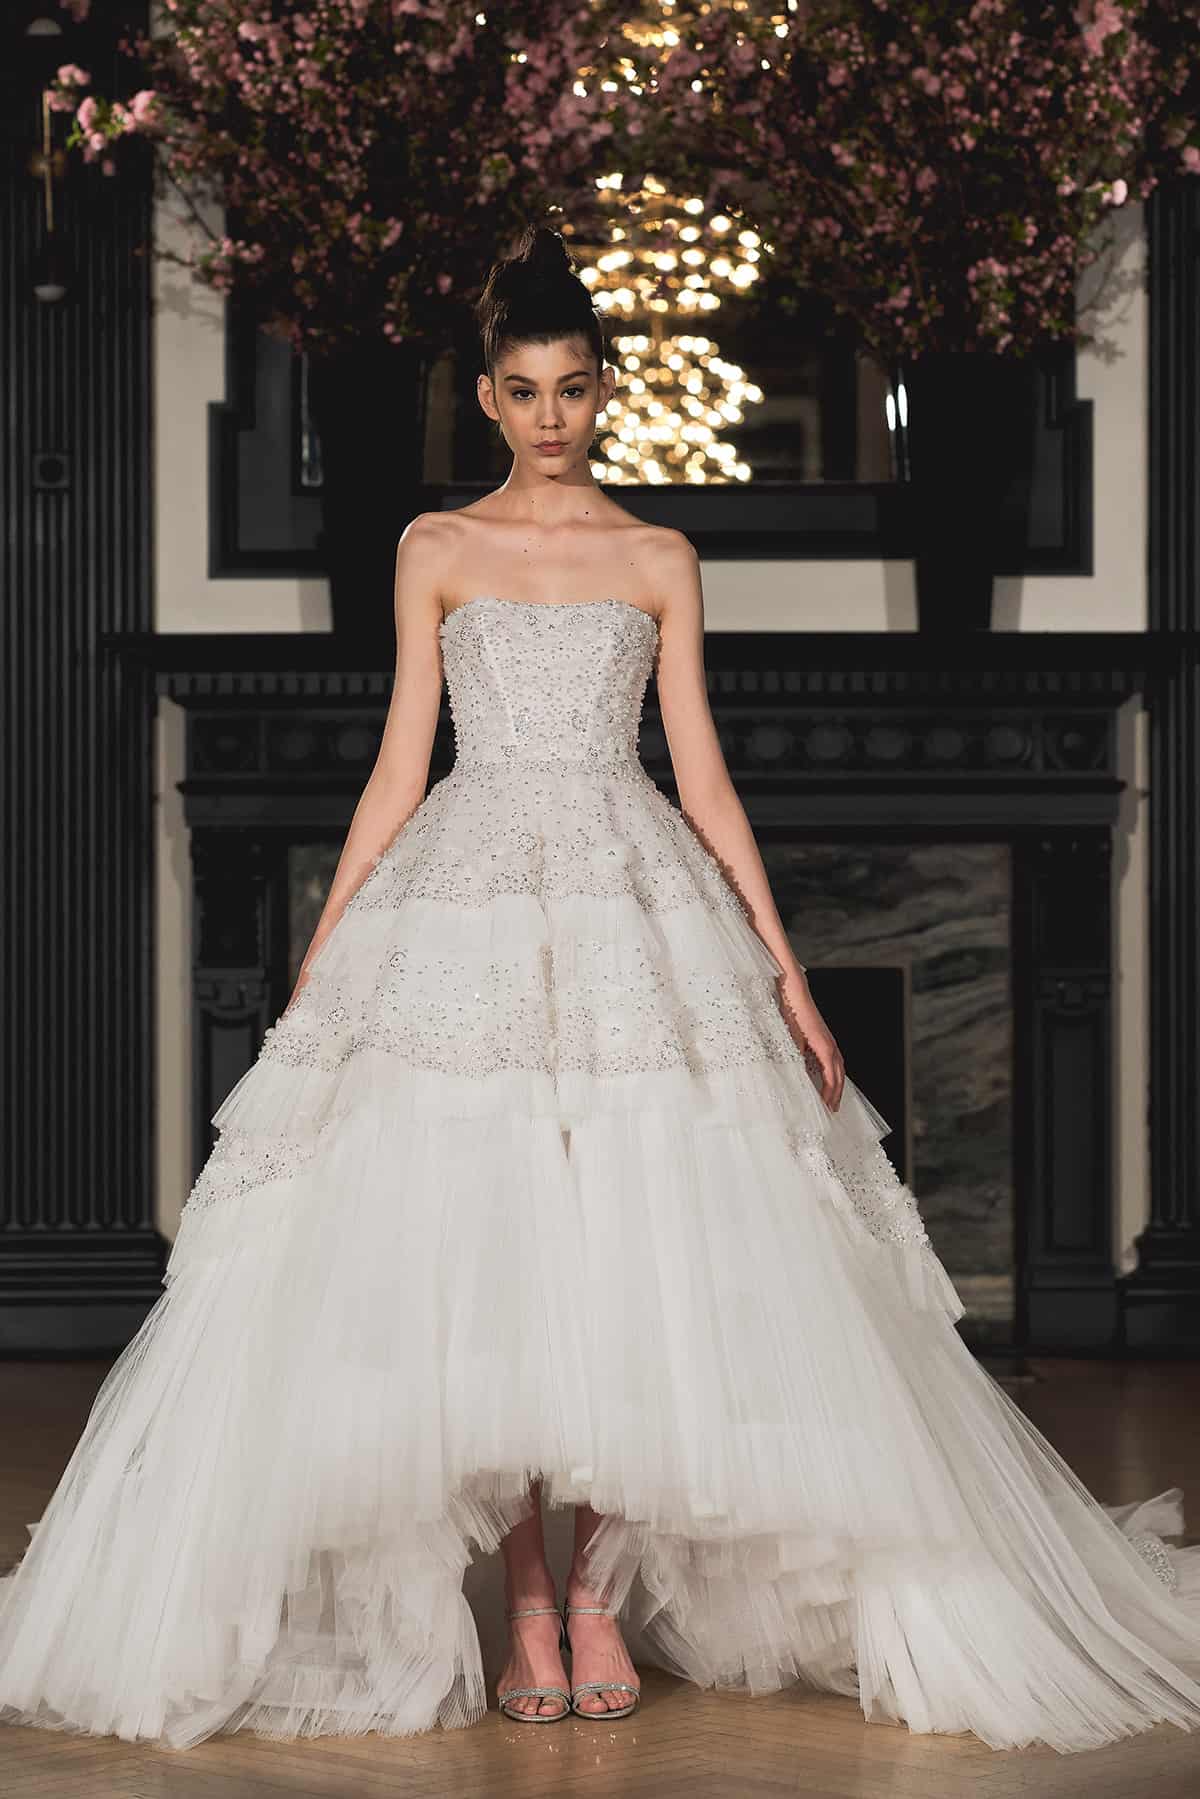 Bridal fashion trends for 2019: Corset bodices - Queensland Brides